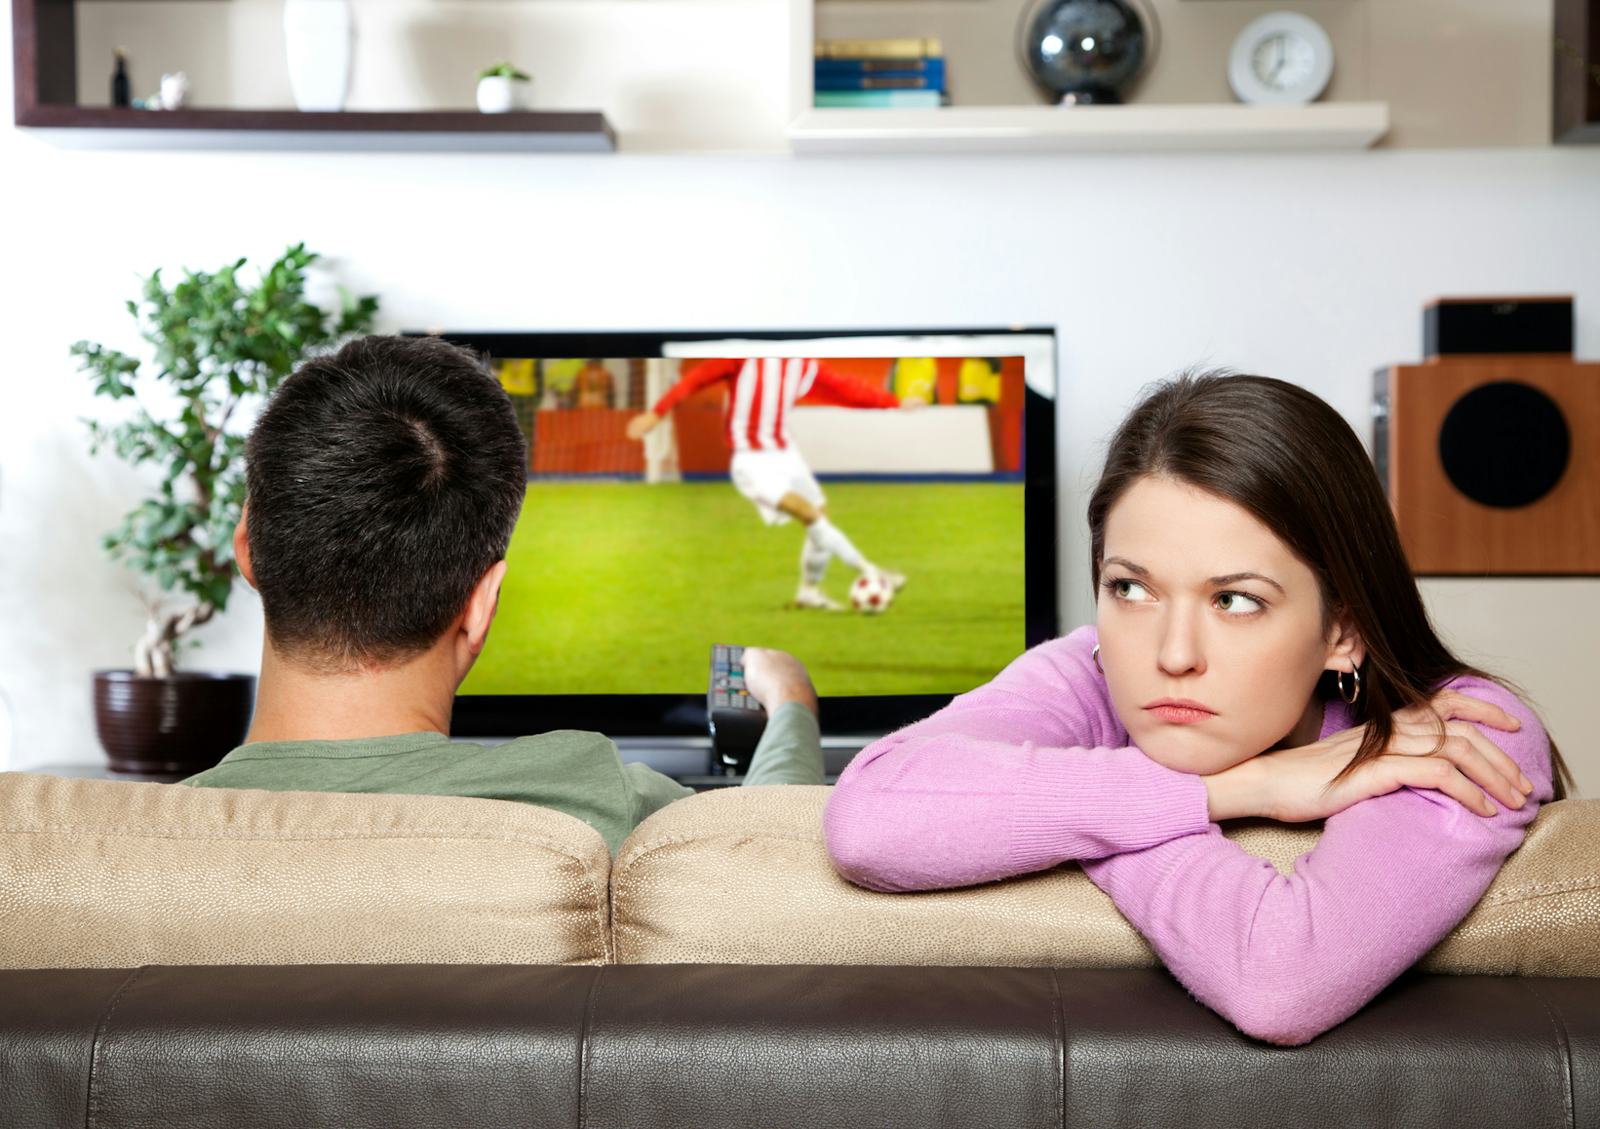 Do you watch the new. Мужчина у телевизора. Мужчина и женщина на диване. Муж с женой у телевизора. Женщина у телевизора.